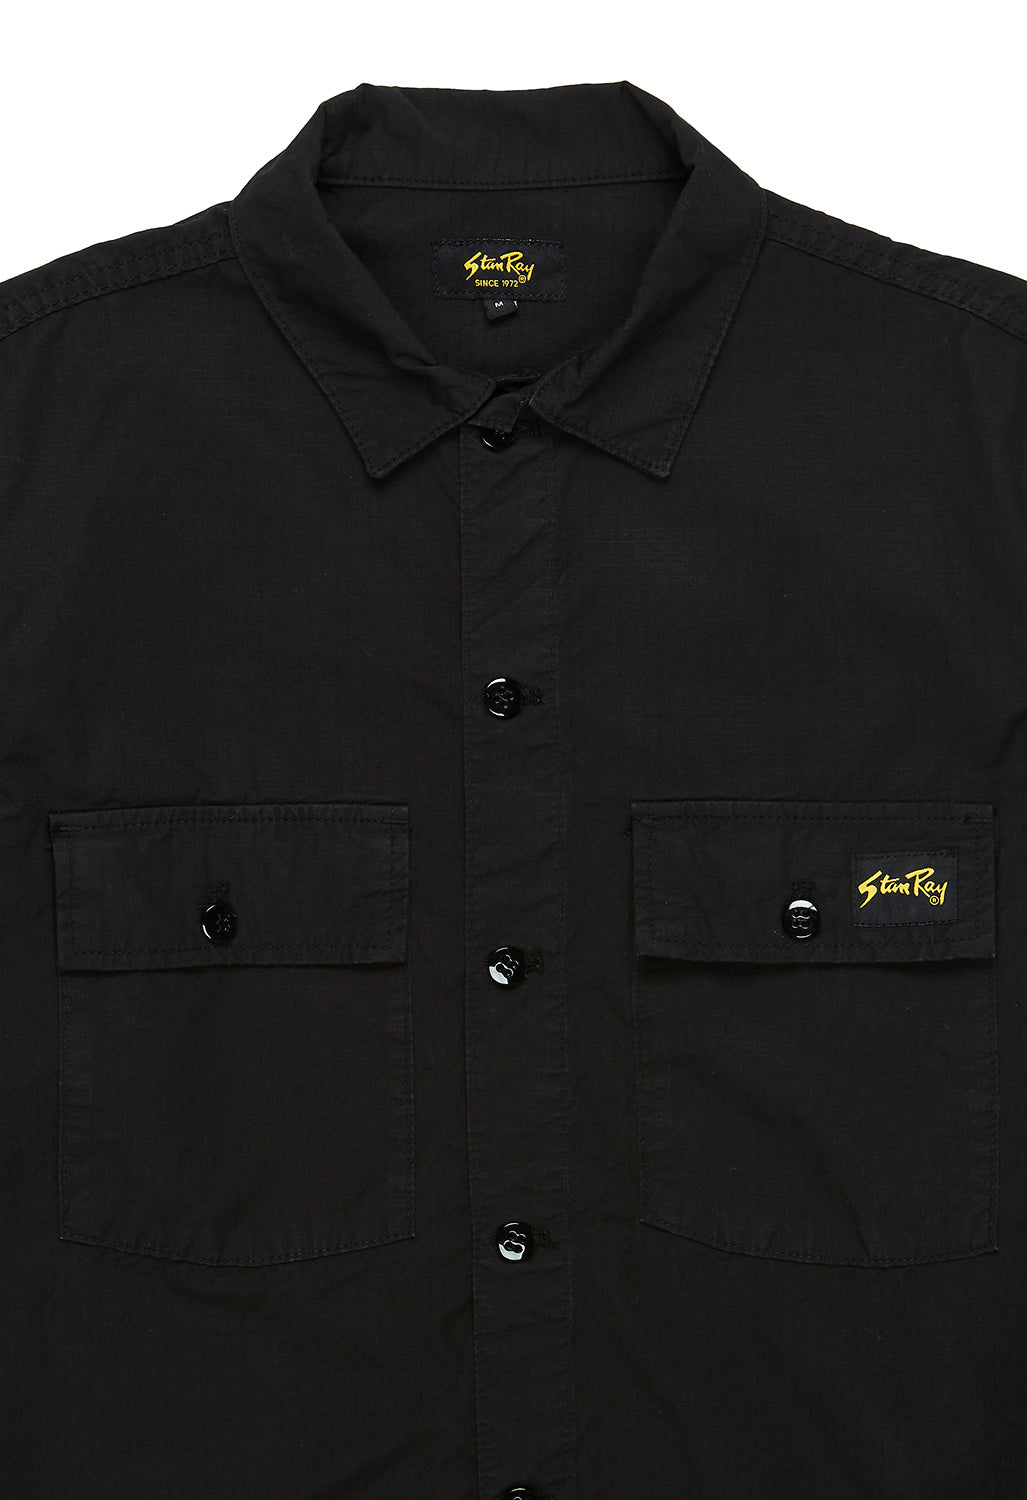 Stan Ray Men's CPO Shirt - Black Ripstop